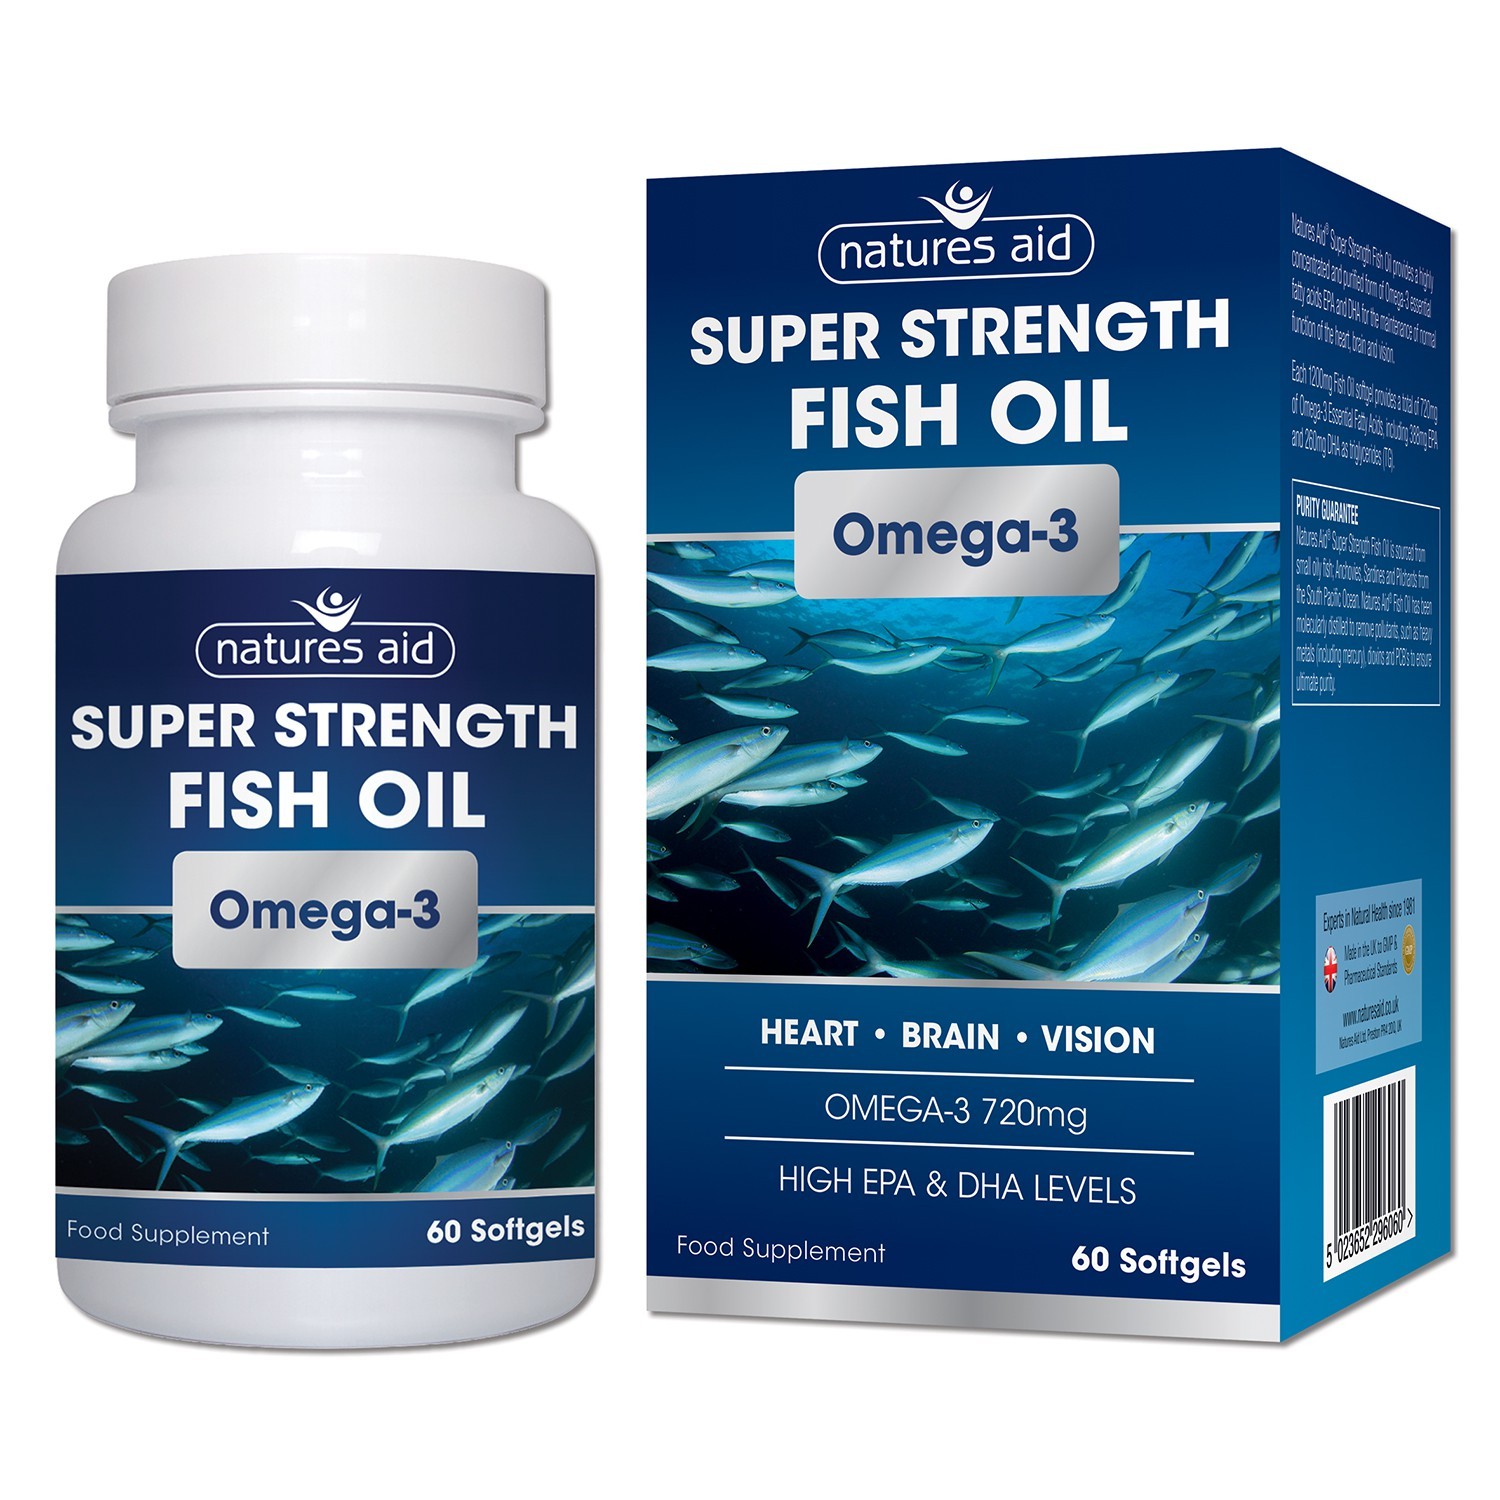 Natures Aid Super Strength Fish Oil (Omega 3) - Providing 720mg OF Omega 3 Fatty Acids